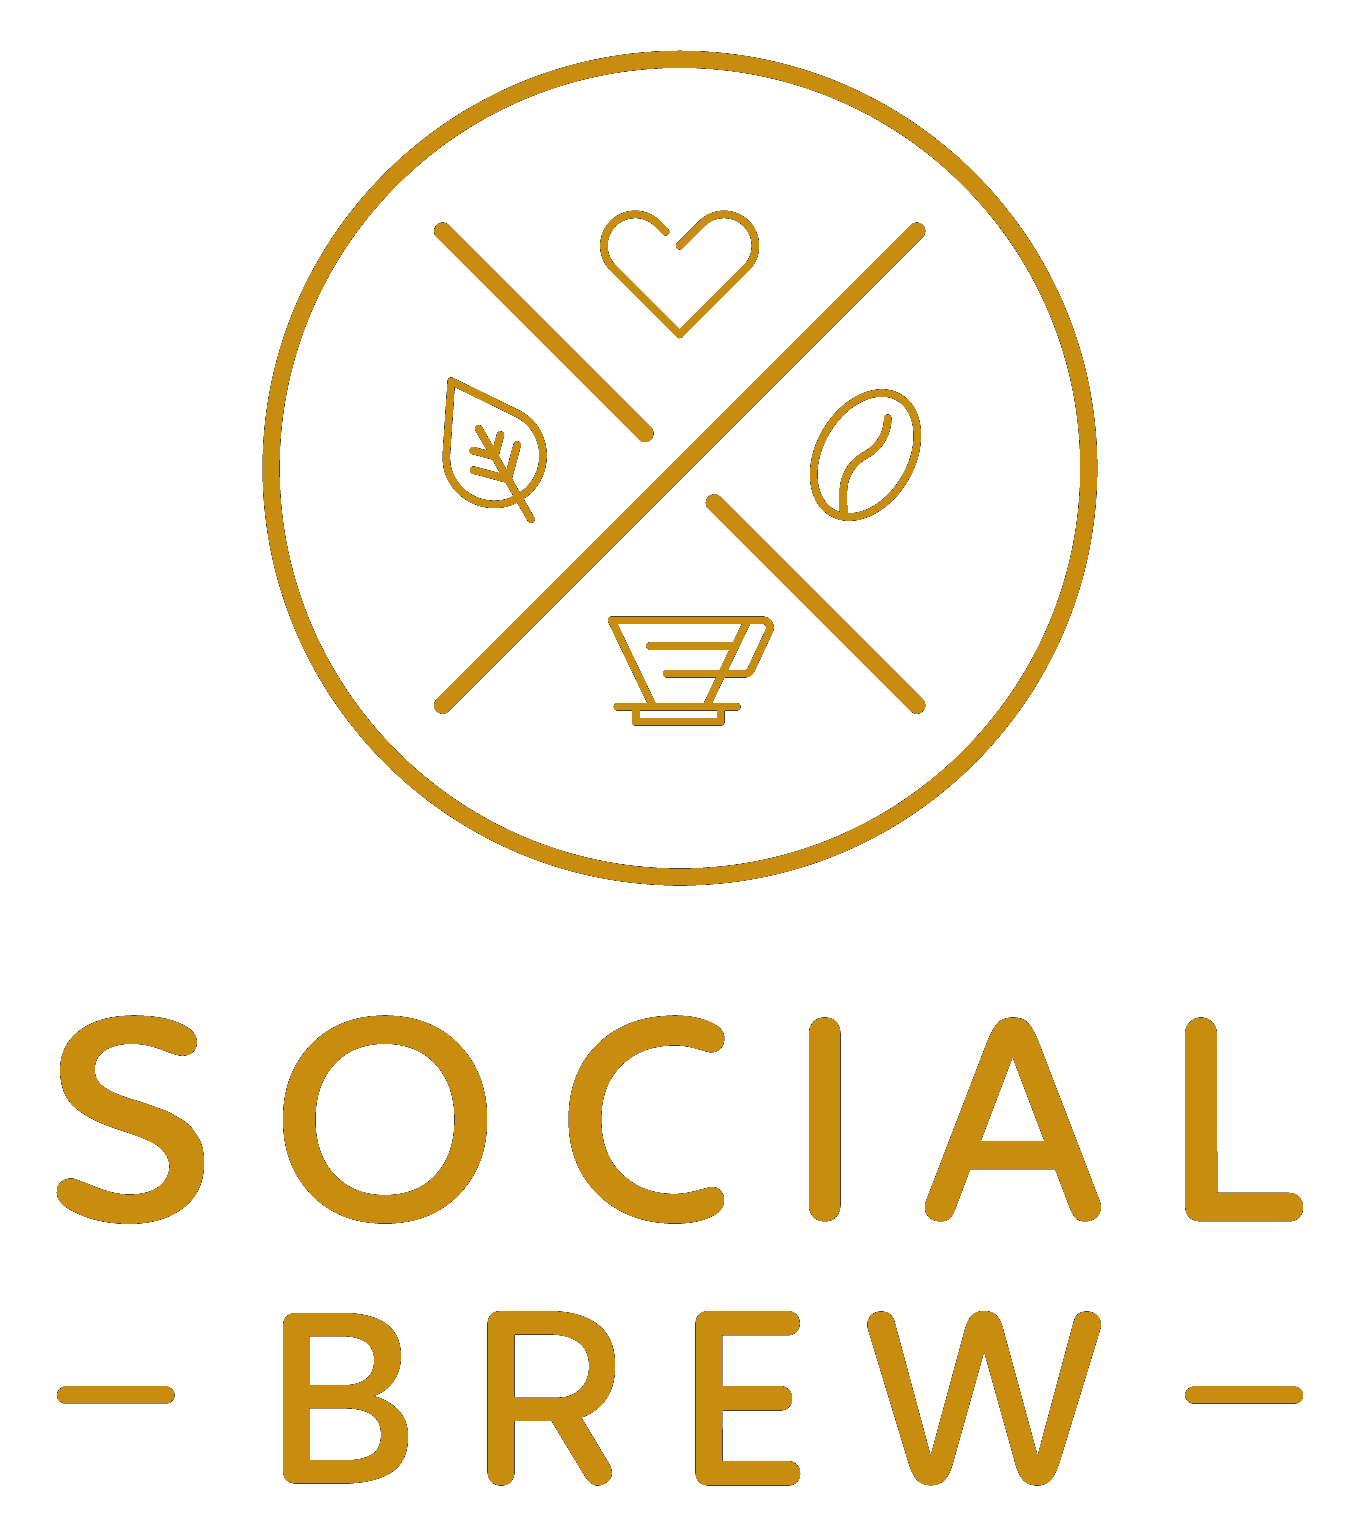 Social Brew